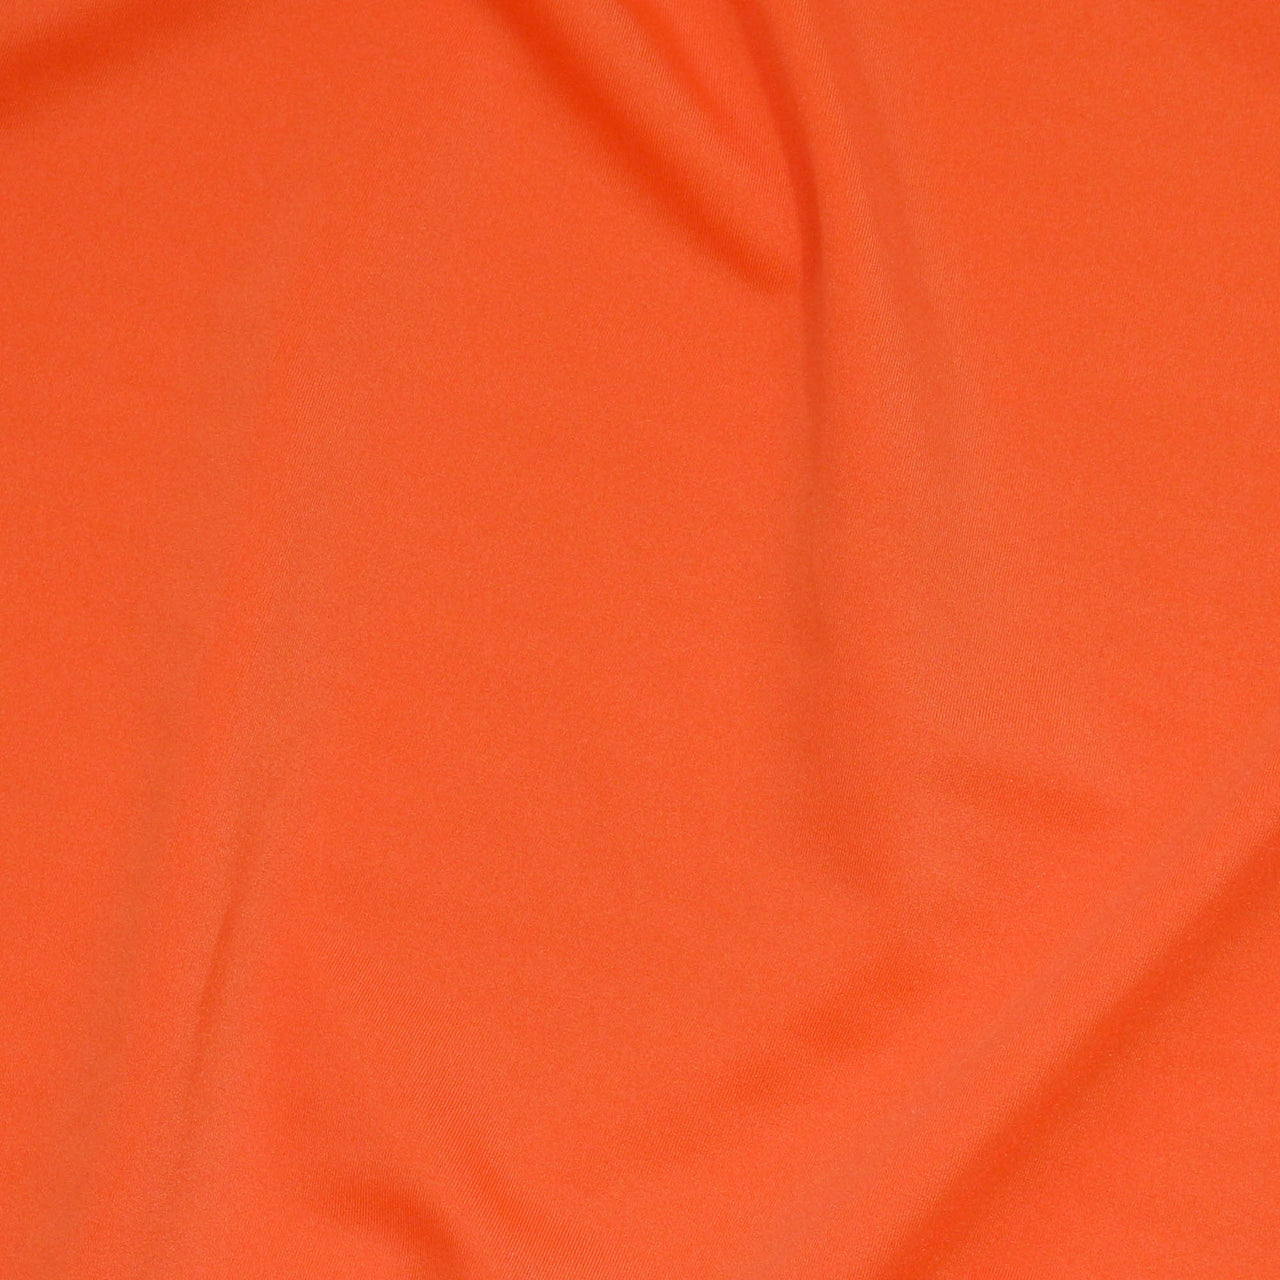 Orange - Nylon Spandex Fabric - 4 Way All Way Stretch Superior Quality - Leotards, Dancewear